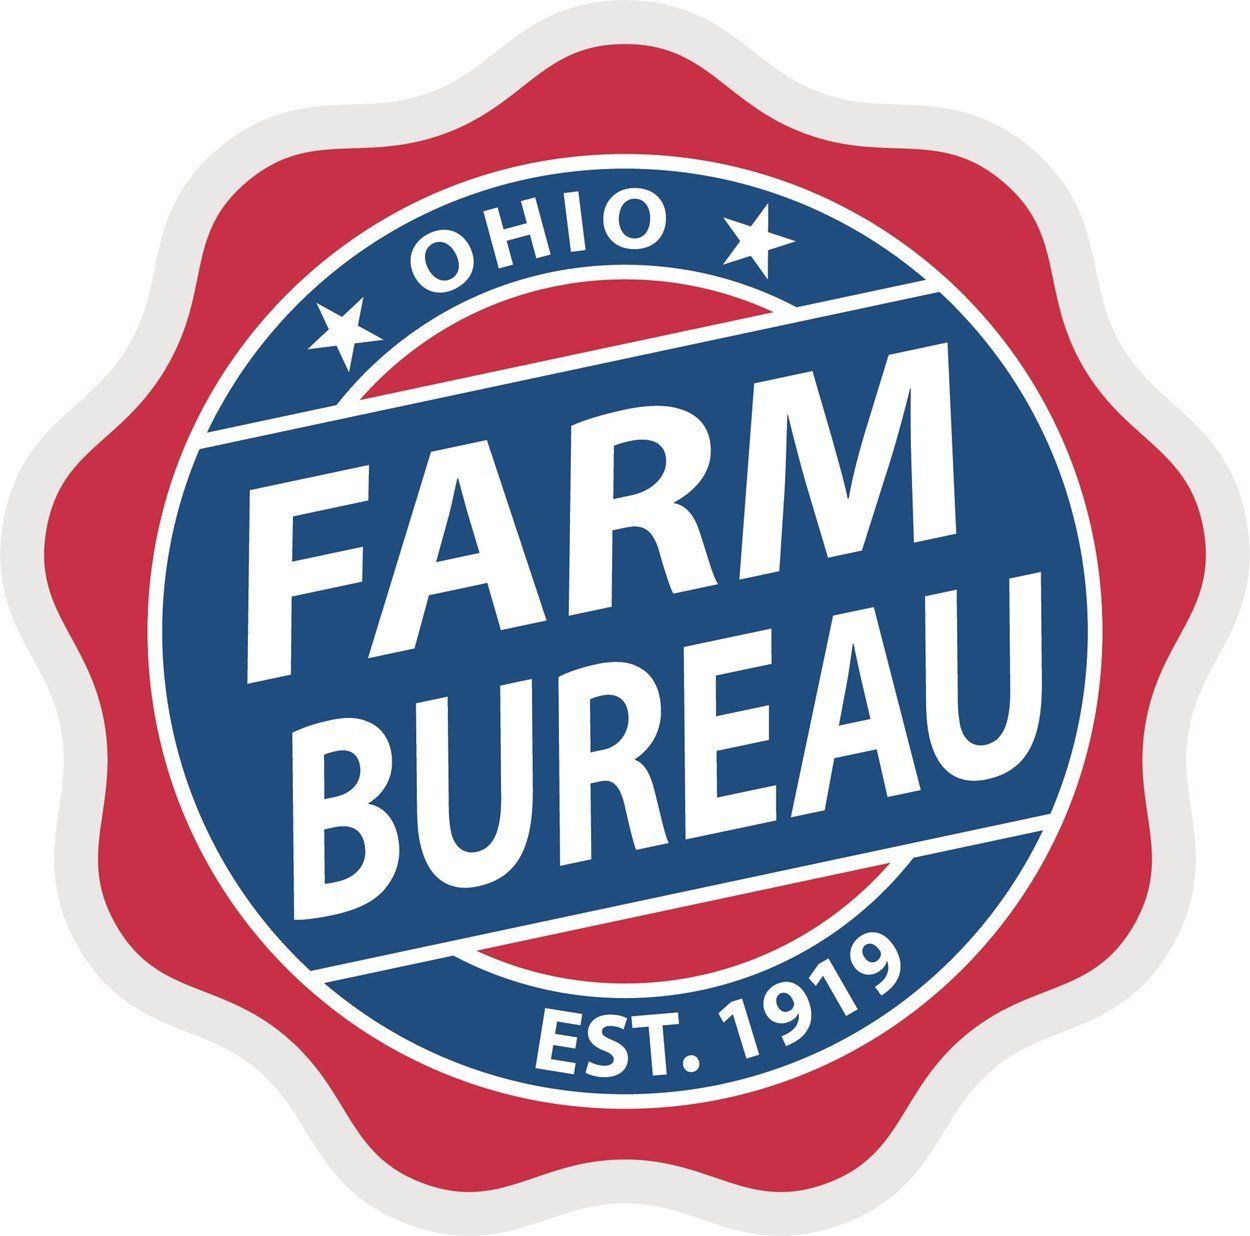 Ohio Farm Bureau Friend of Agriculture Designation Roy Klopfenstein for State Representative